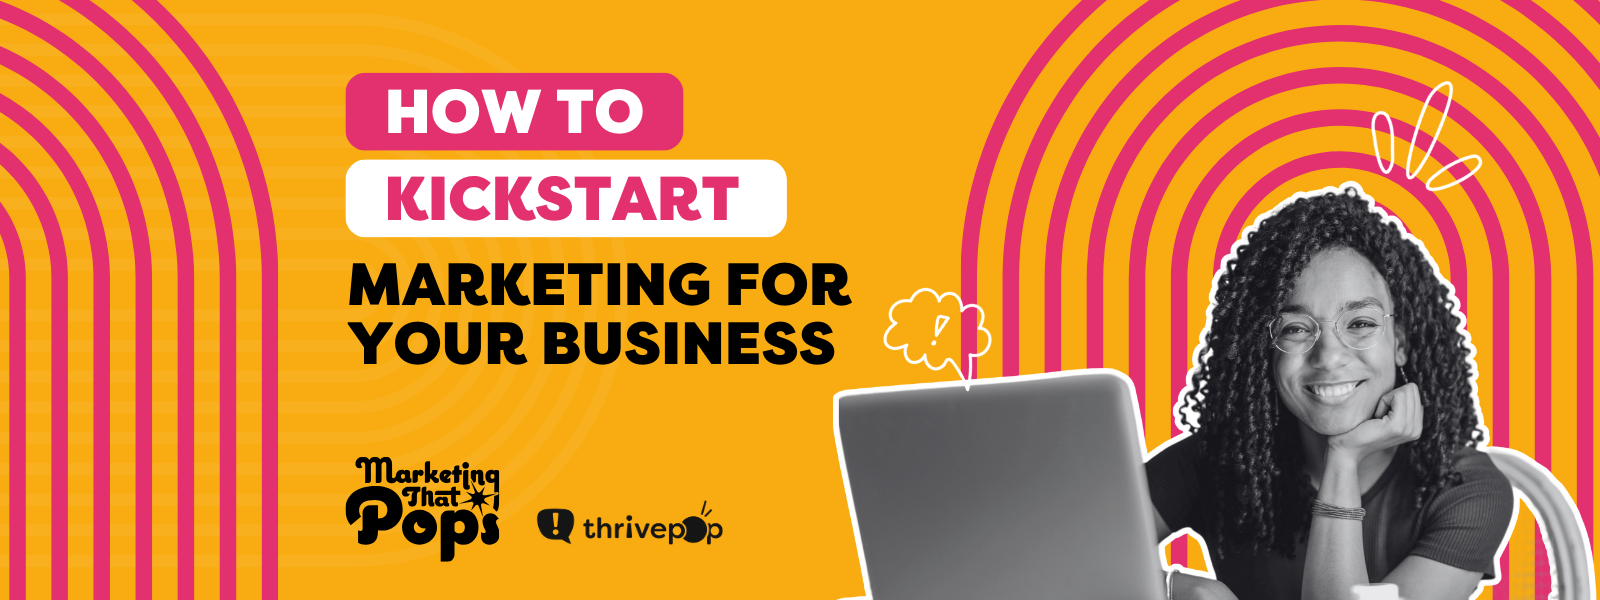 How do I Kickstart Marketing for My Business?